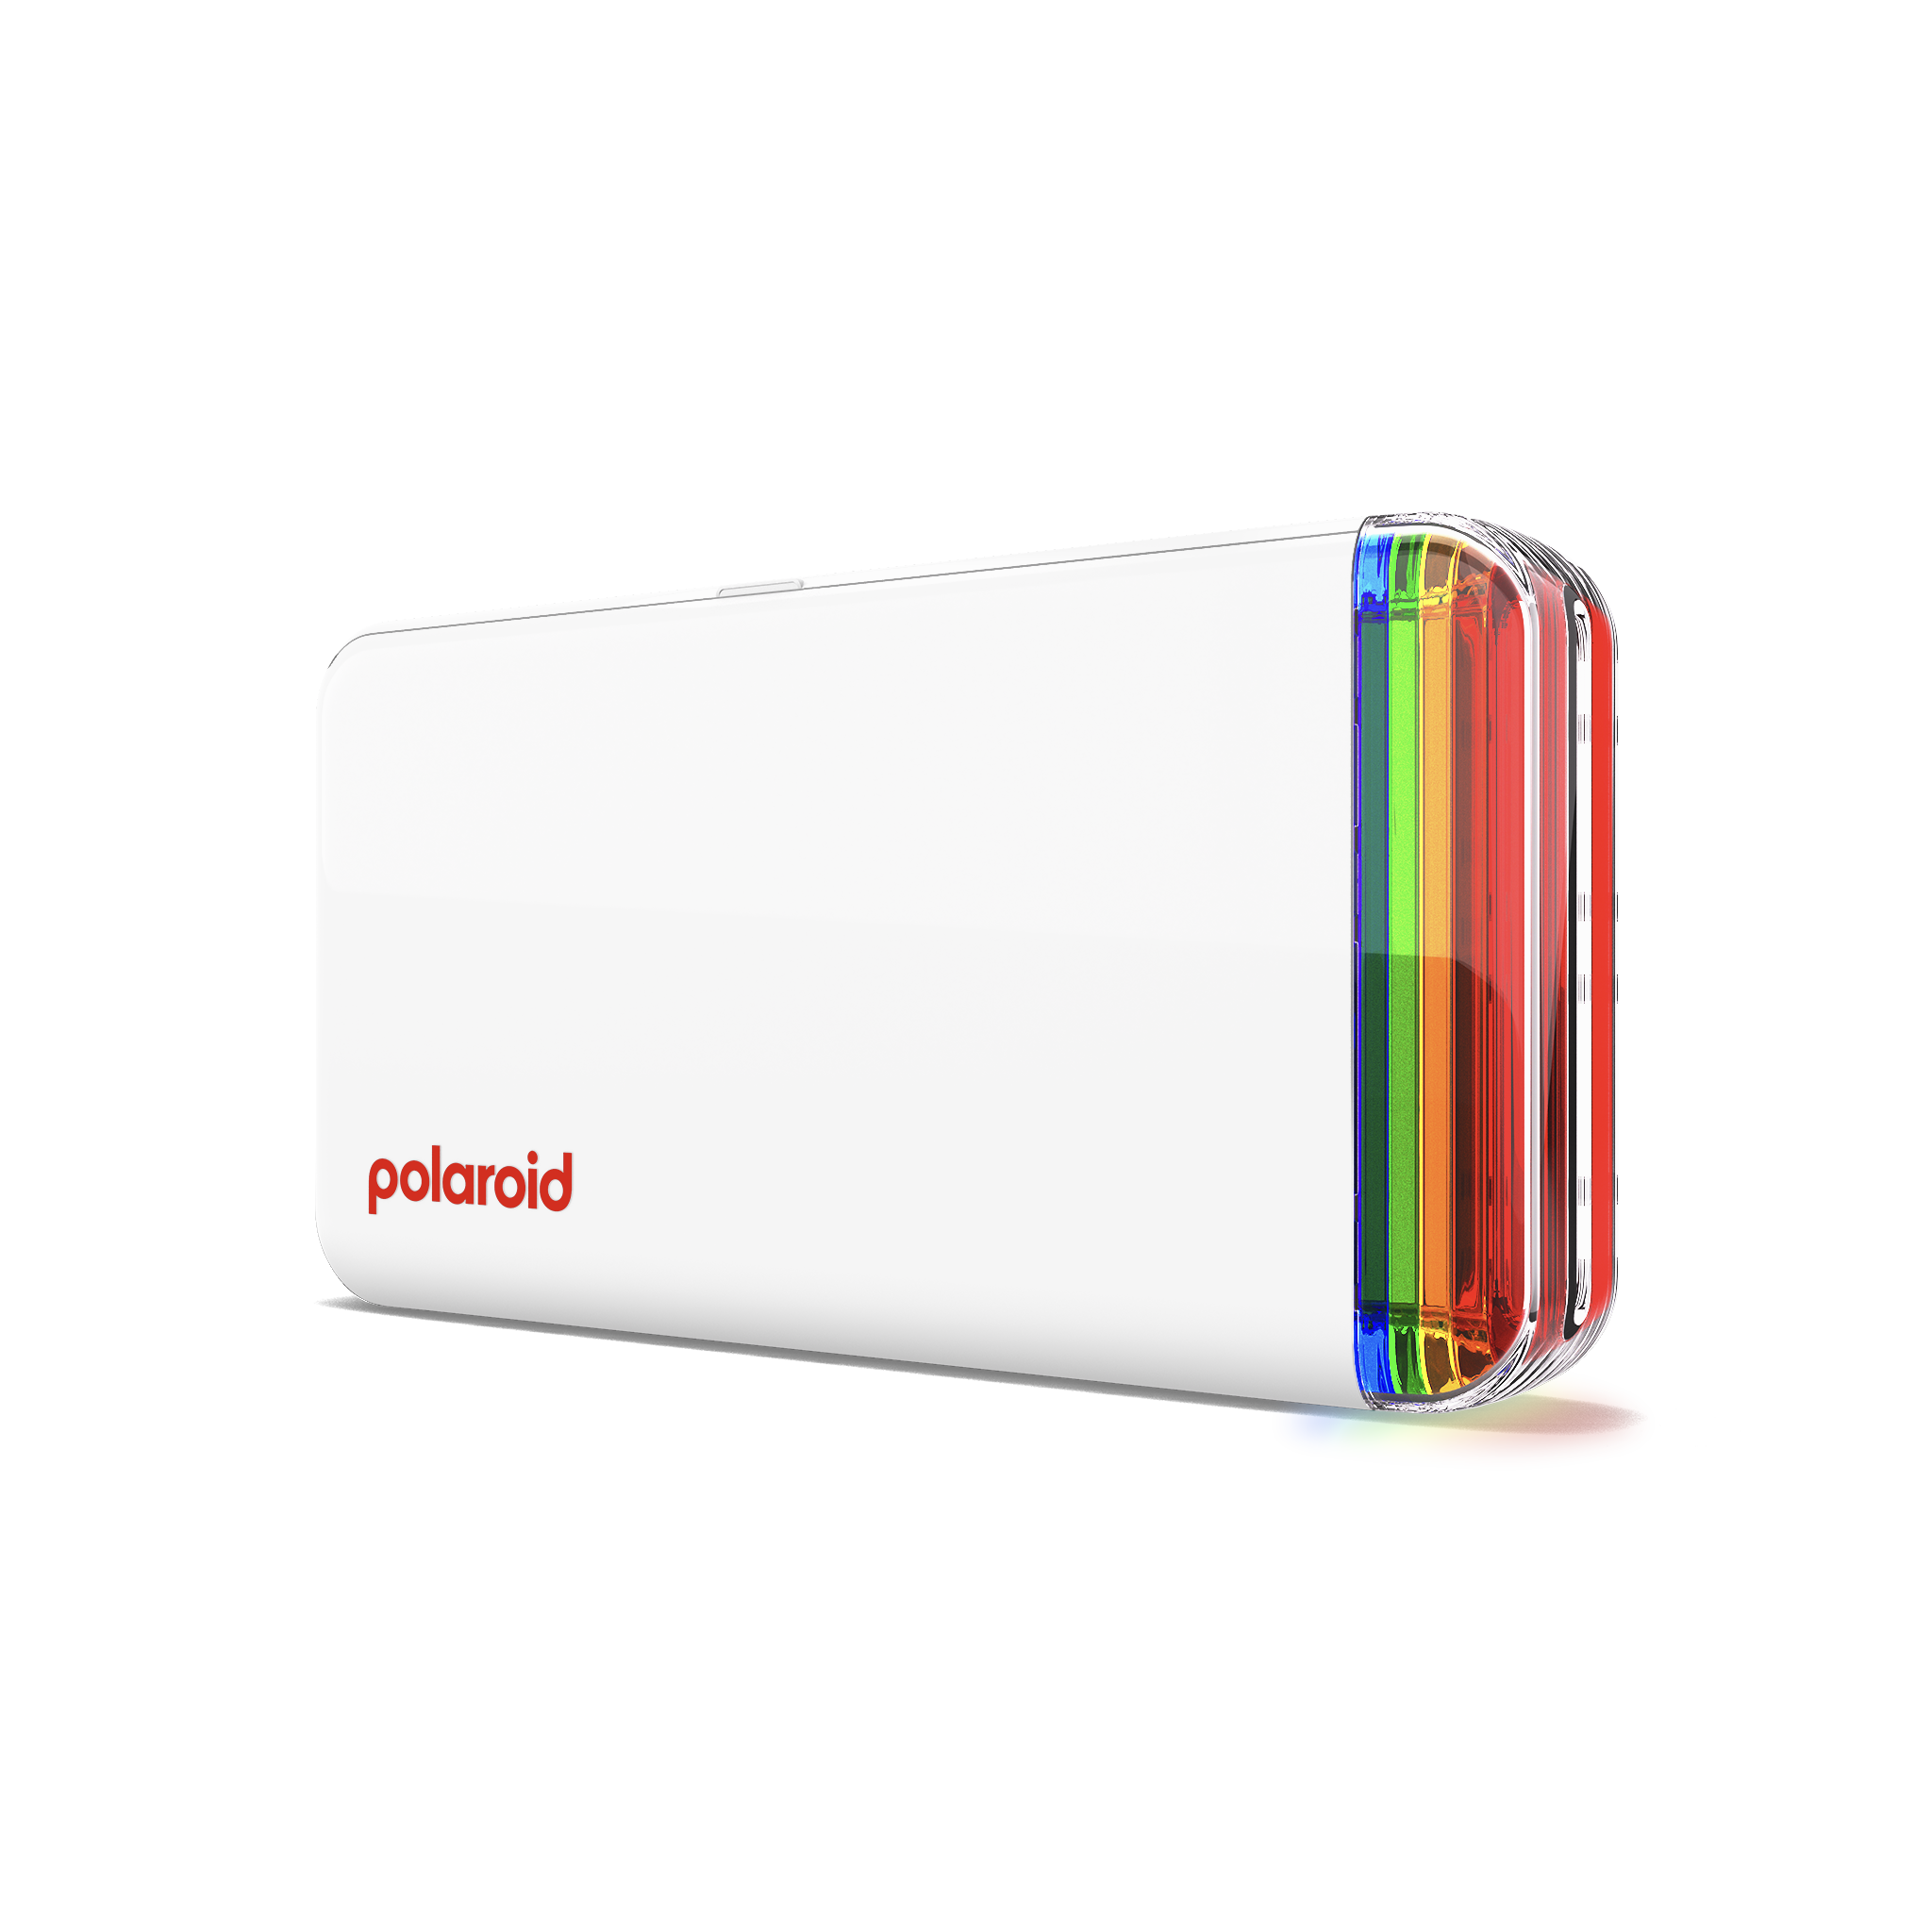 Polaroid Hi-Print 2x3 Pocket Photo Printer review - The Gadgeteer